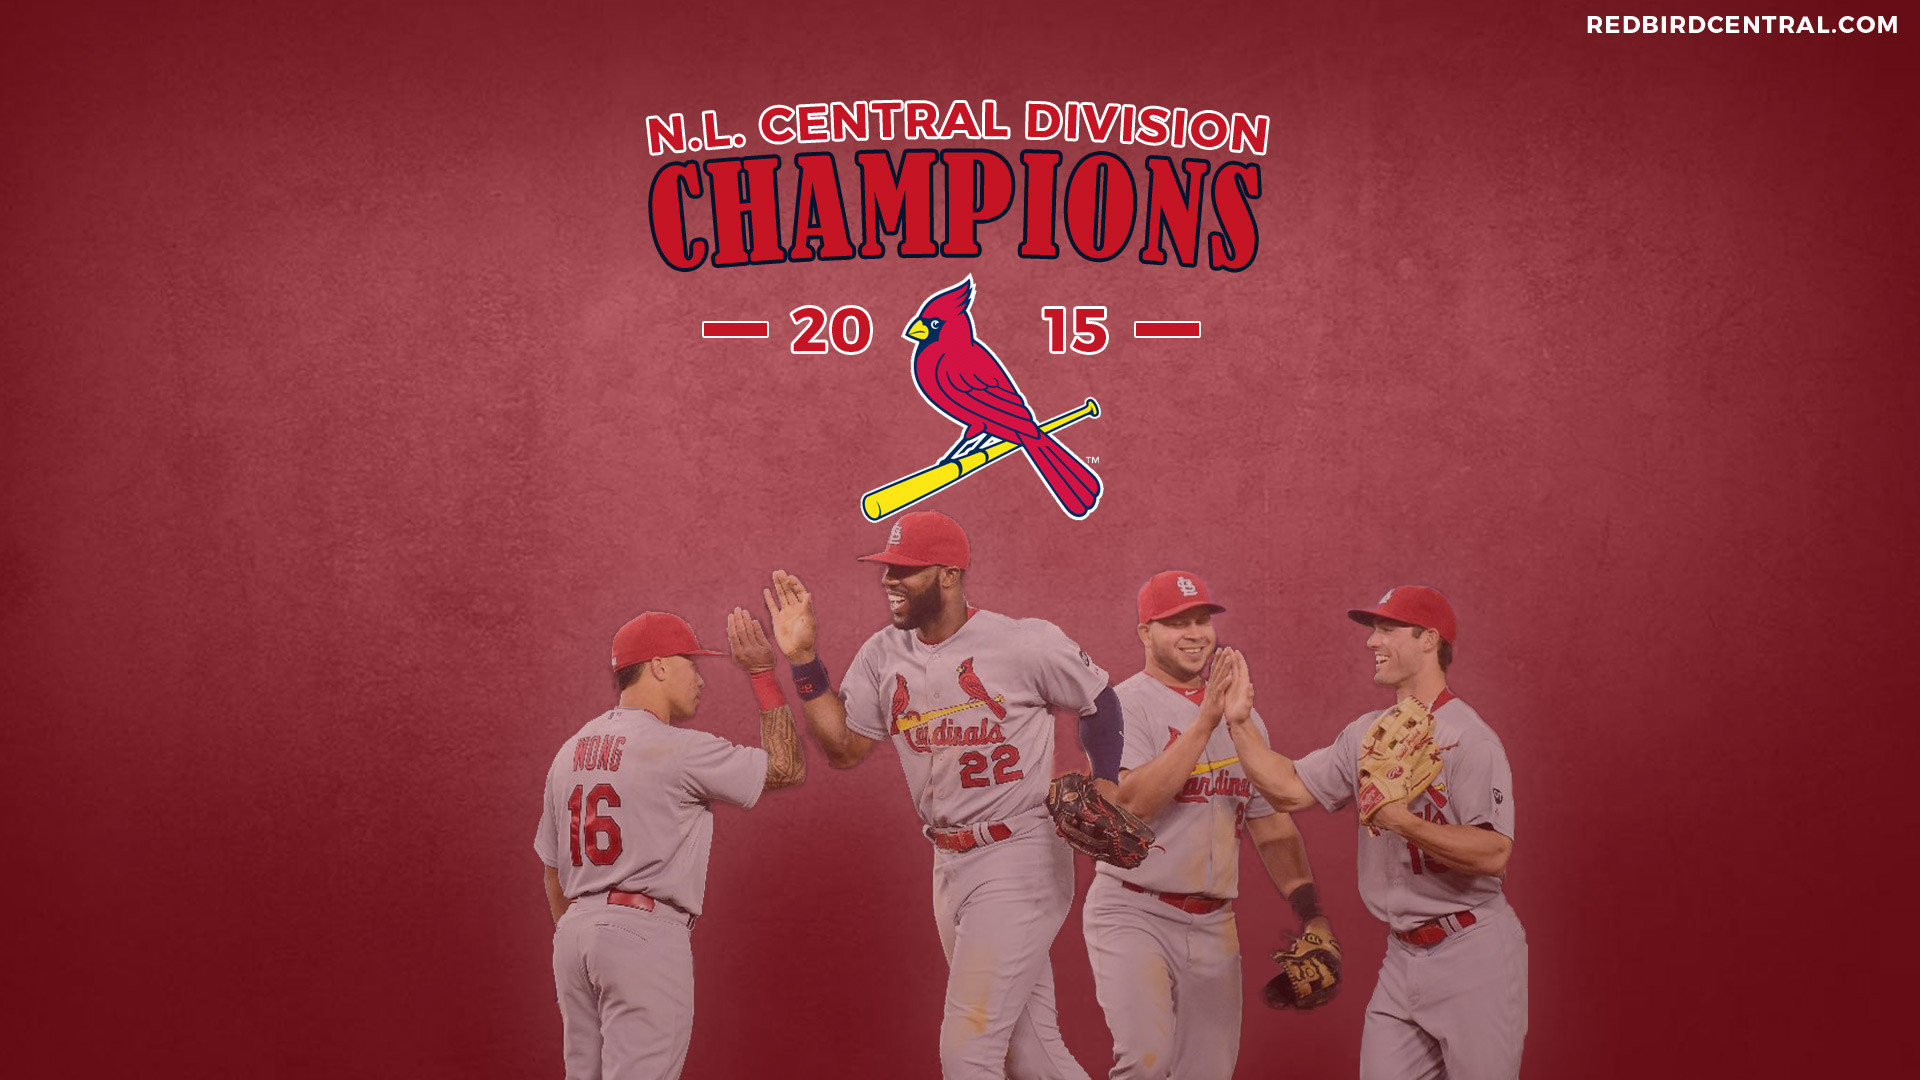 1920x1080 RedbirdCentral.com - St. Louis Cardinals Wallpaper - 2015 Central Division  Champions